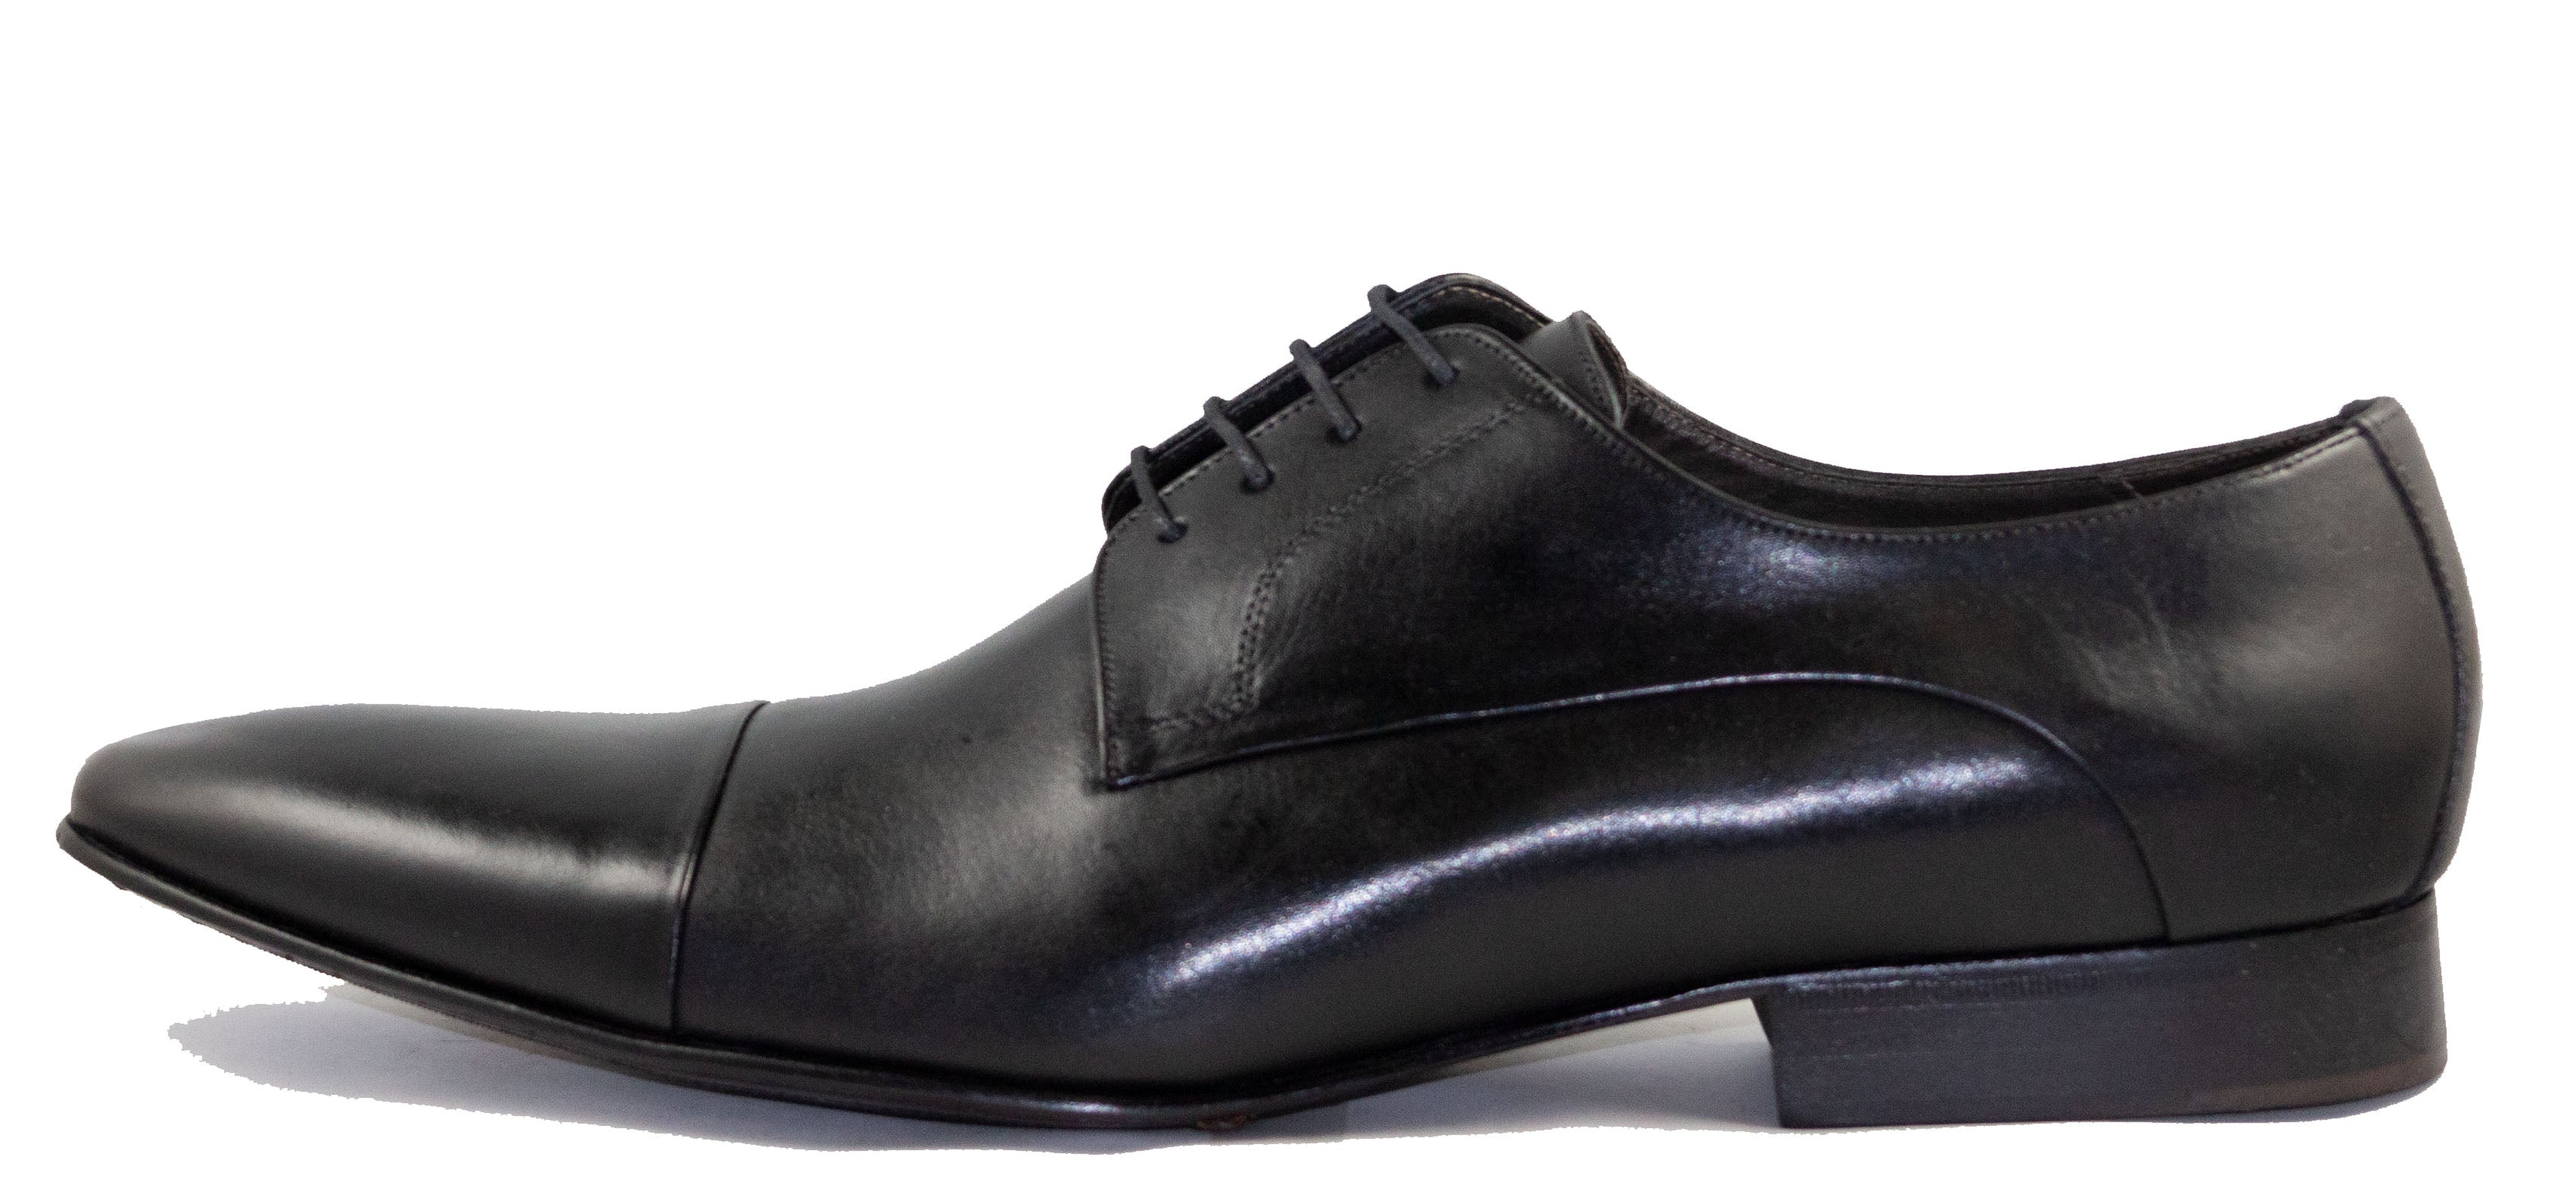 Mario Samello Men's Cap-Toe Dress Shoes  AFONSO-32